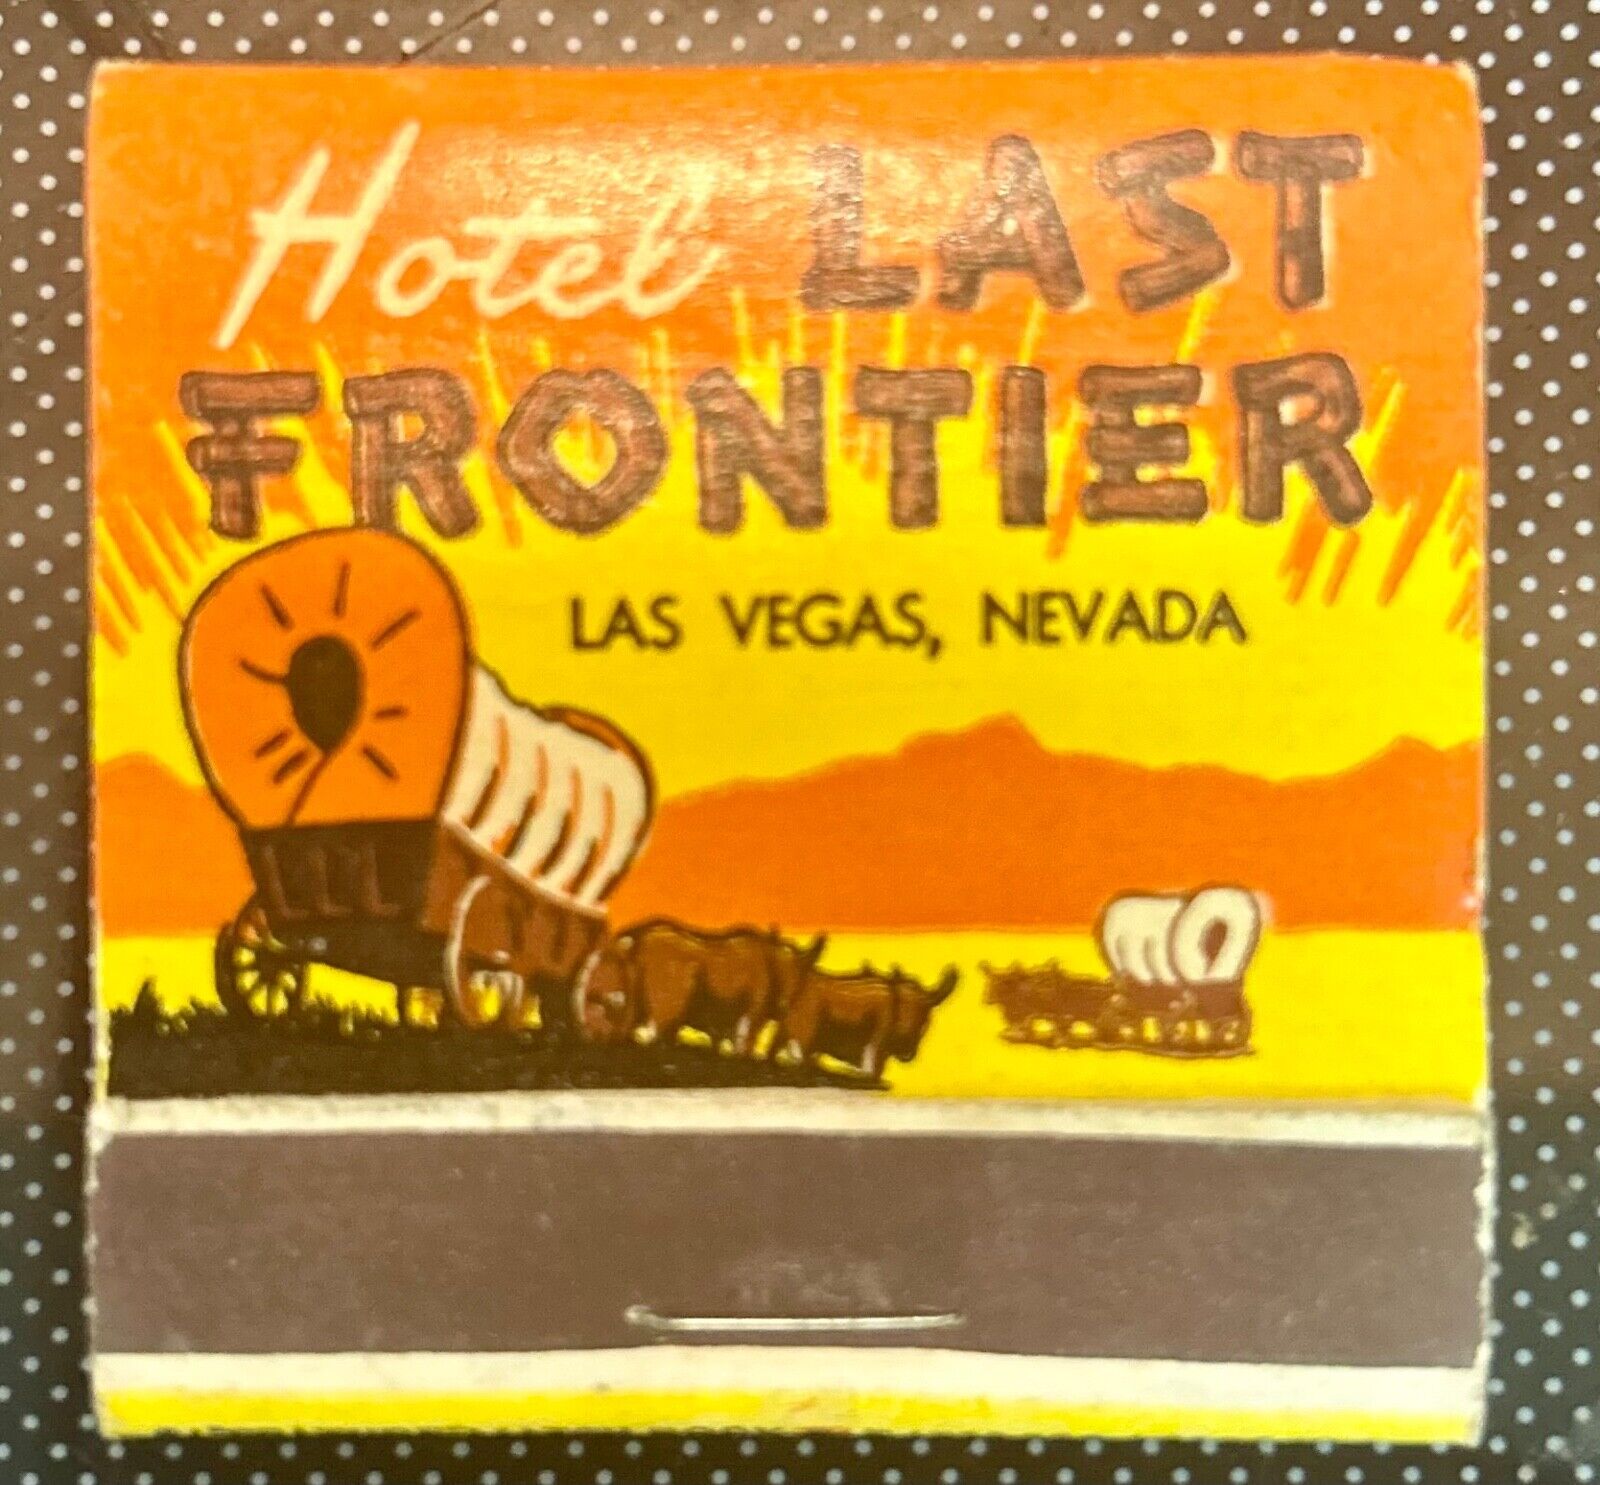 Never Used HOTEL LAST FRONTIER LAS VEGAS NEVADA WAGON MATCHBOOK CASINO ROOM